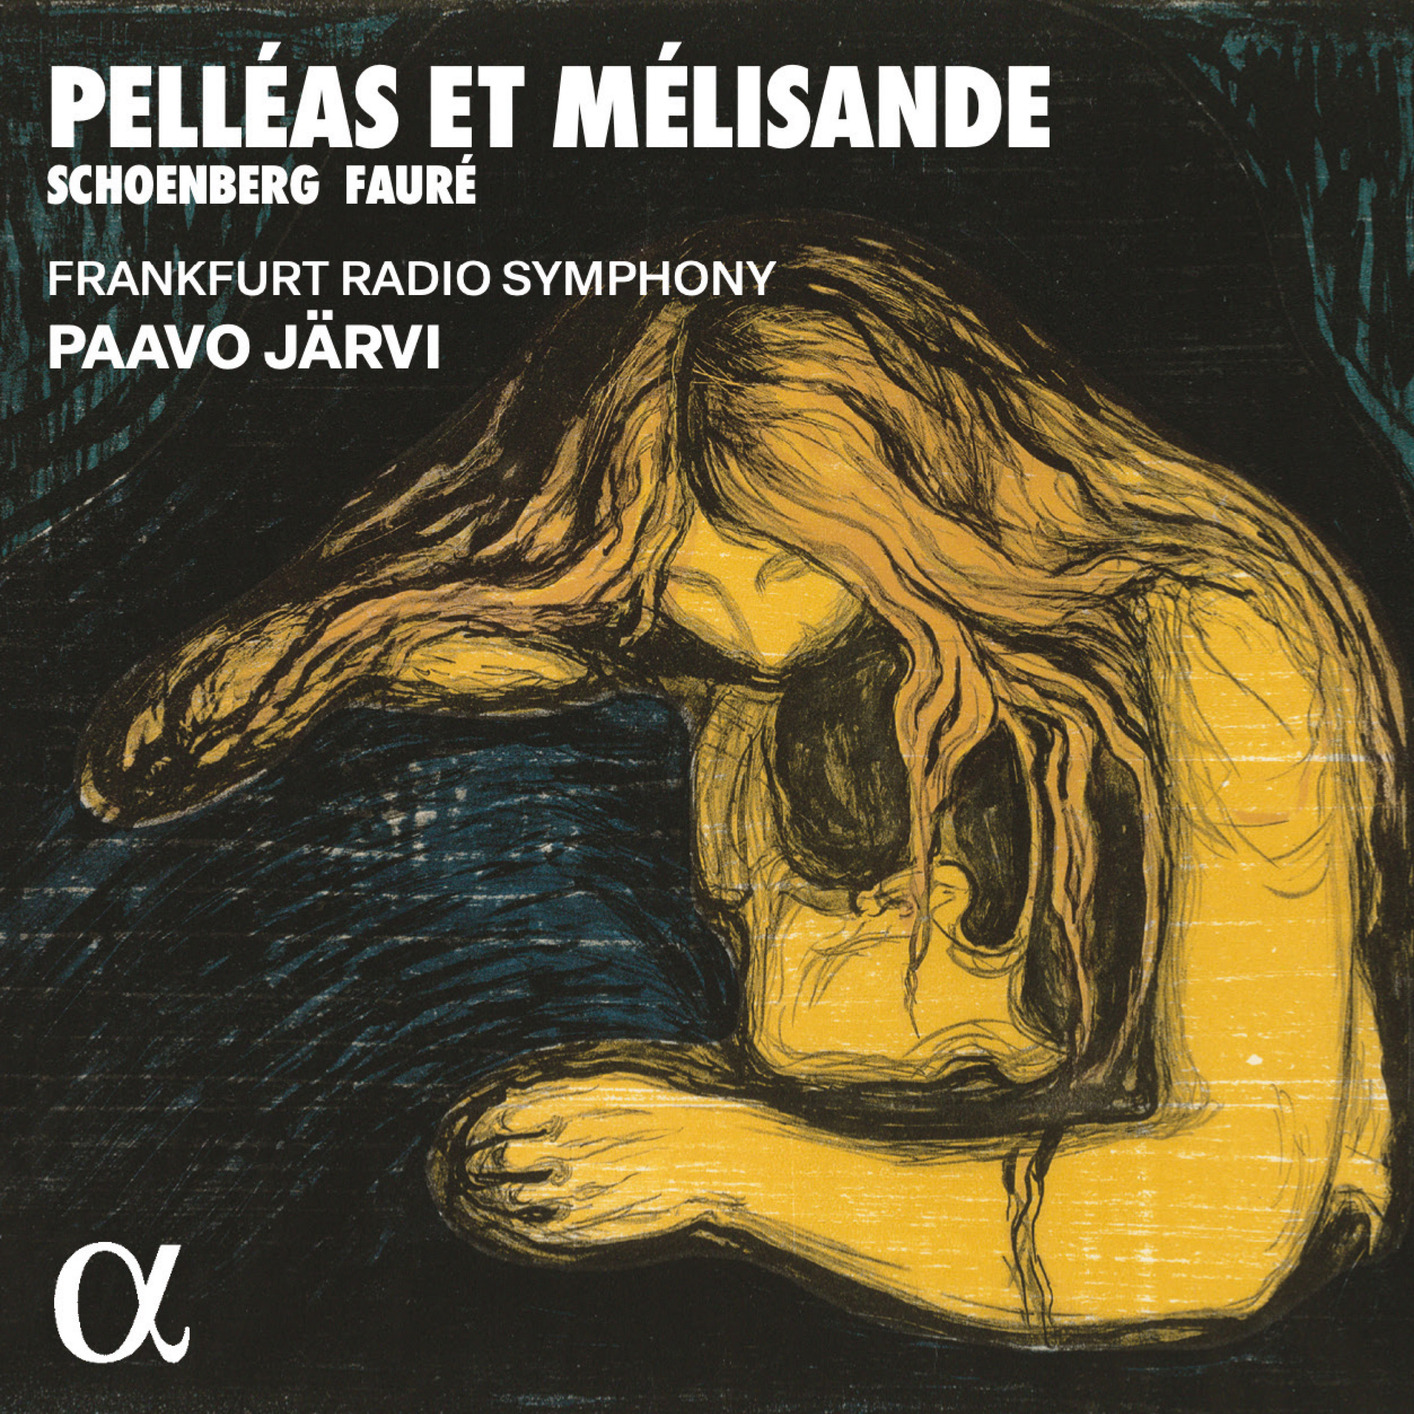 Schoenberg u0026 Fauré: Pelléas et Mélisande. Album of Frankfurt Radio Symphony  u0026 Paavo Järvi buy or stream. | HIGHRESAUDIO